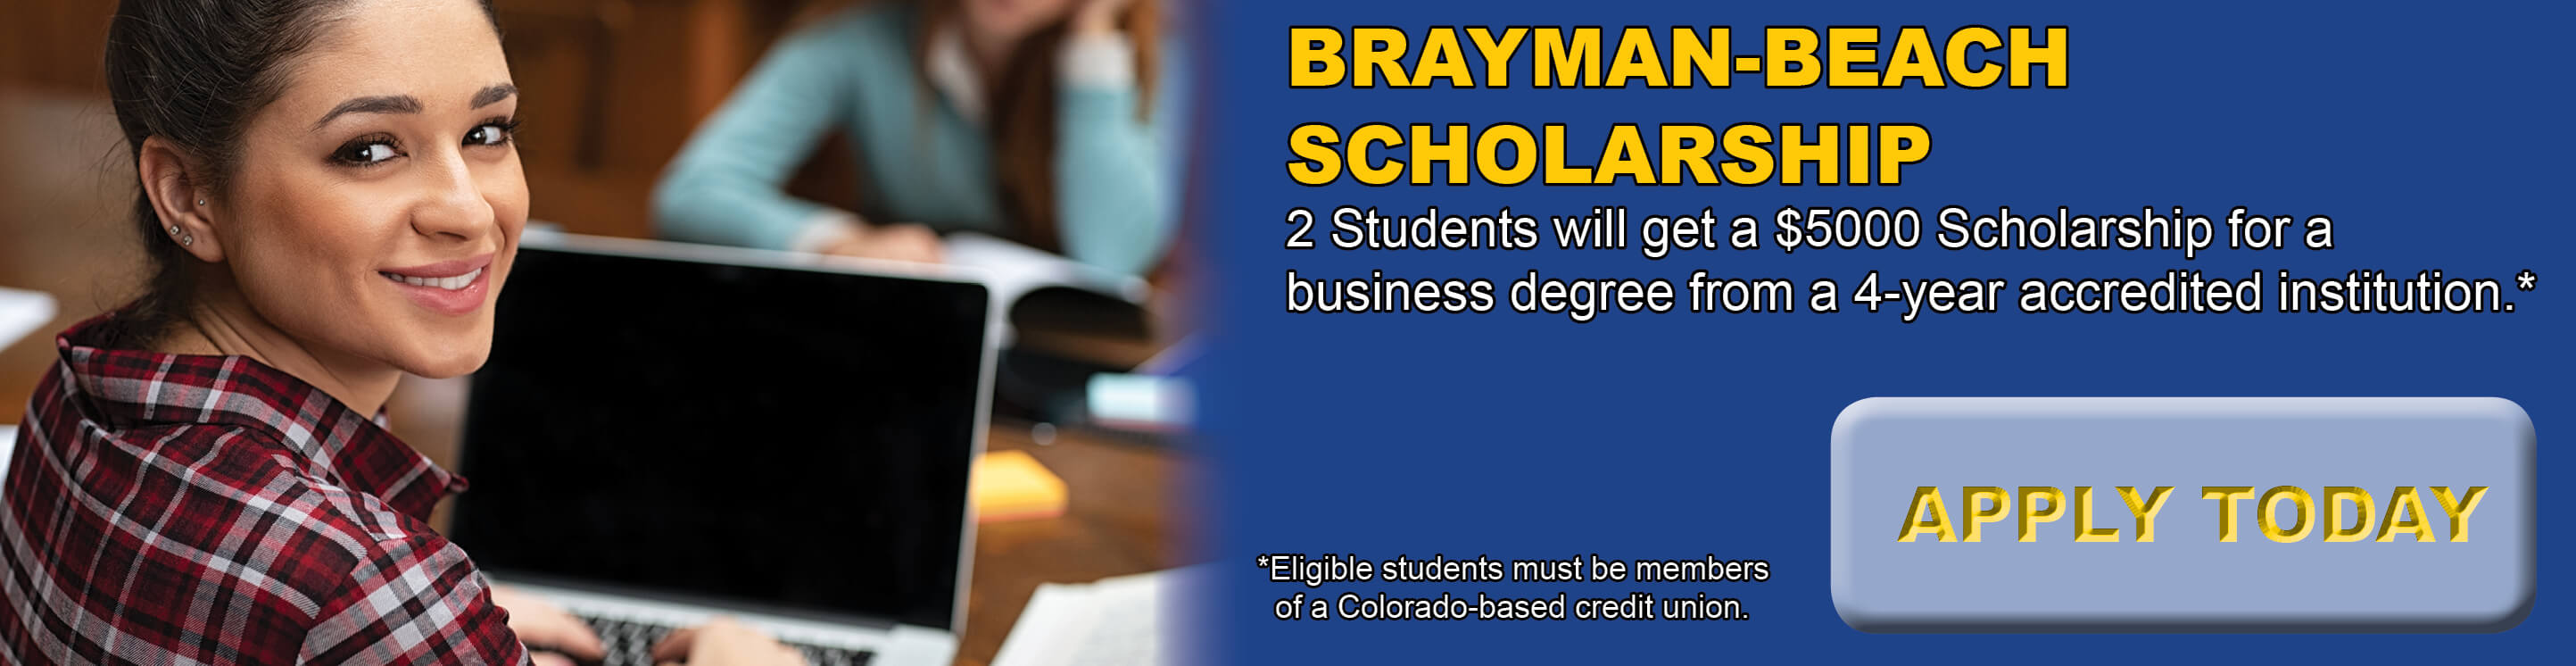 Brayman-Beach Scholarship